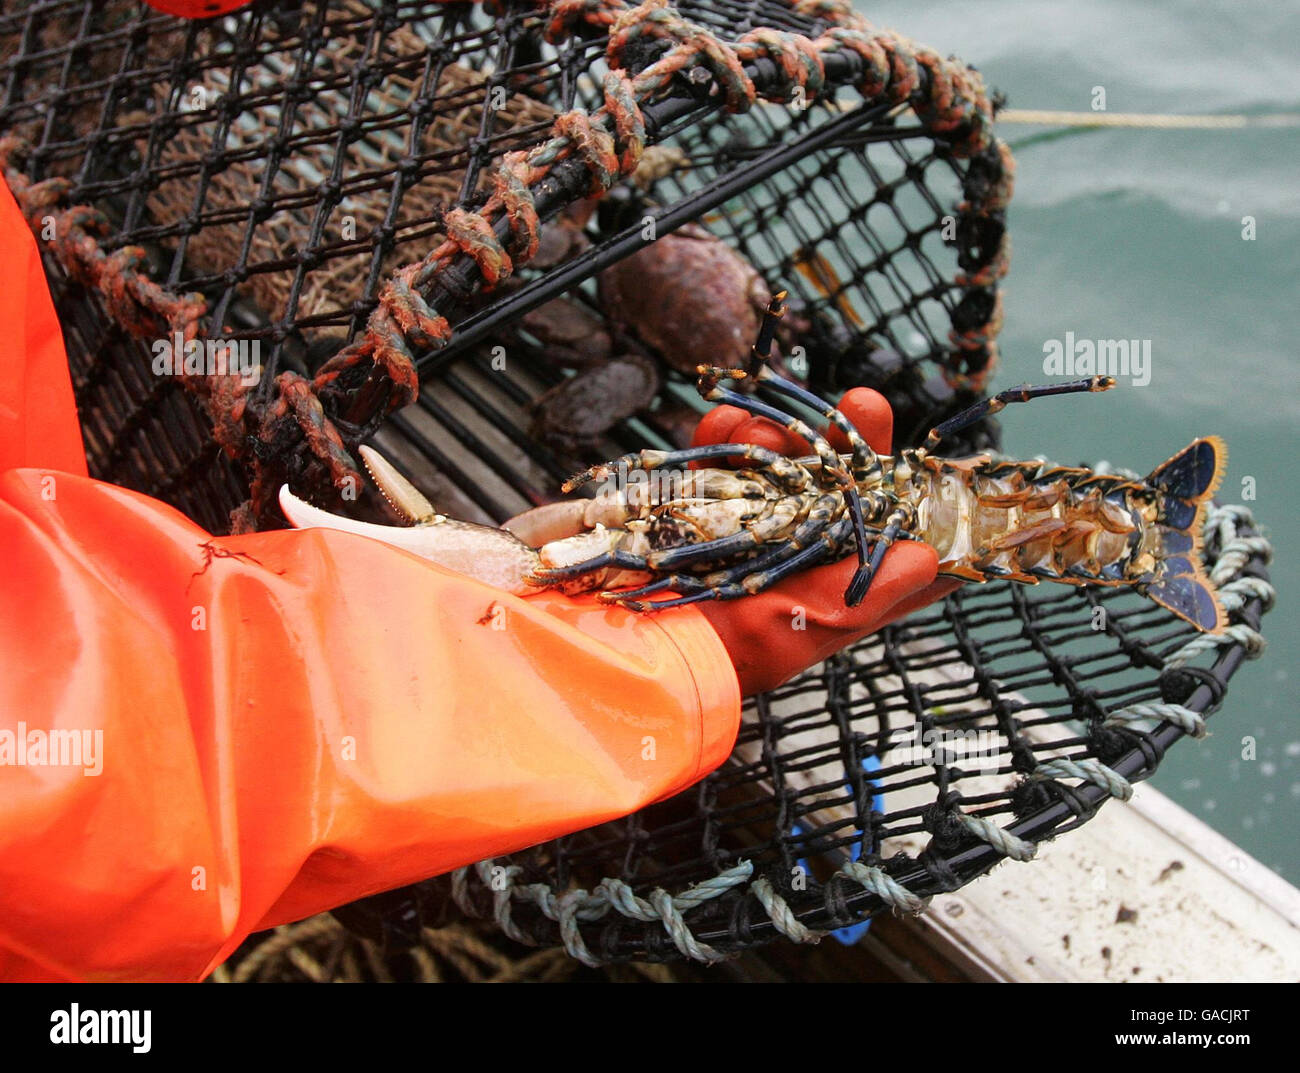 La pêche du homard dans l'Océan Atlantique Banque D'Images